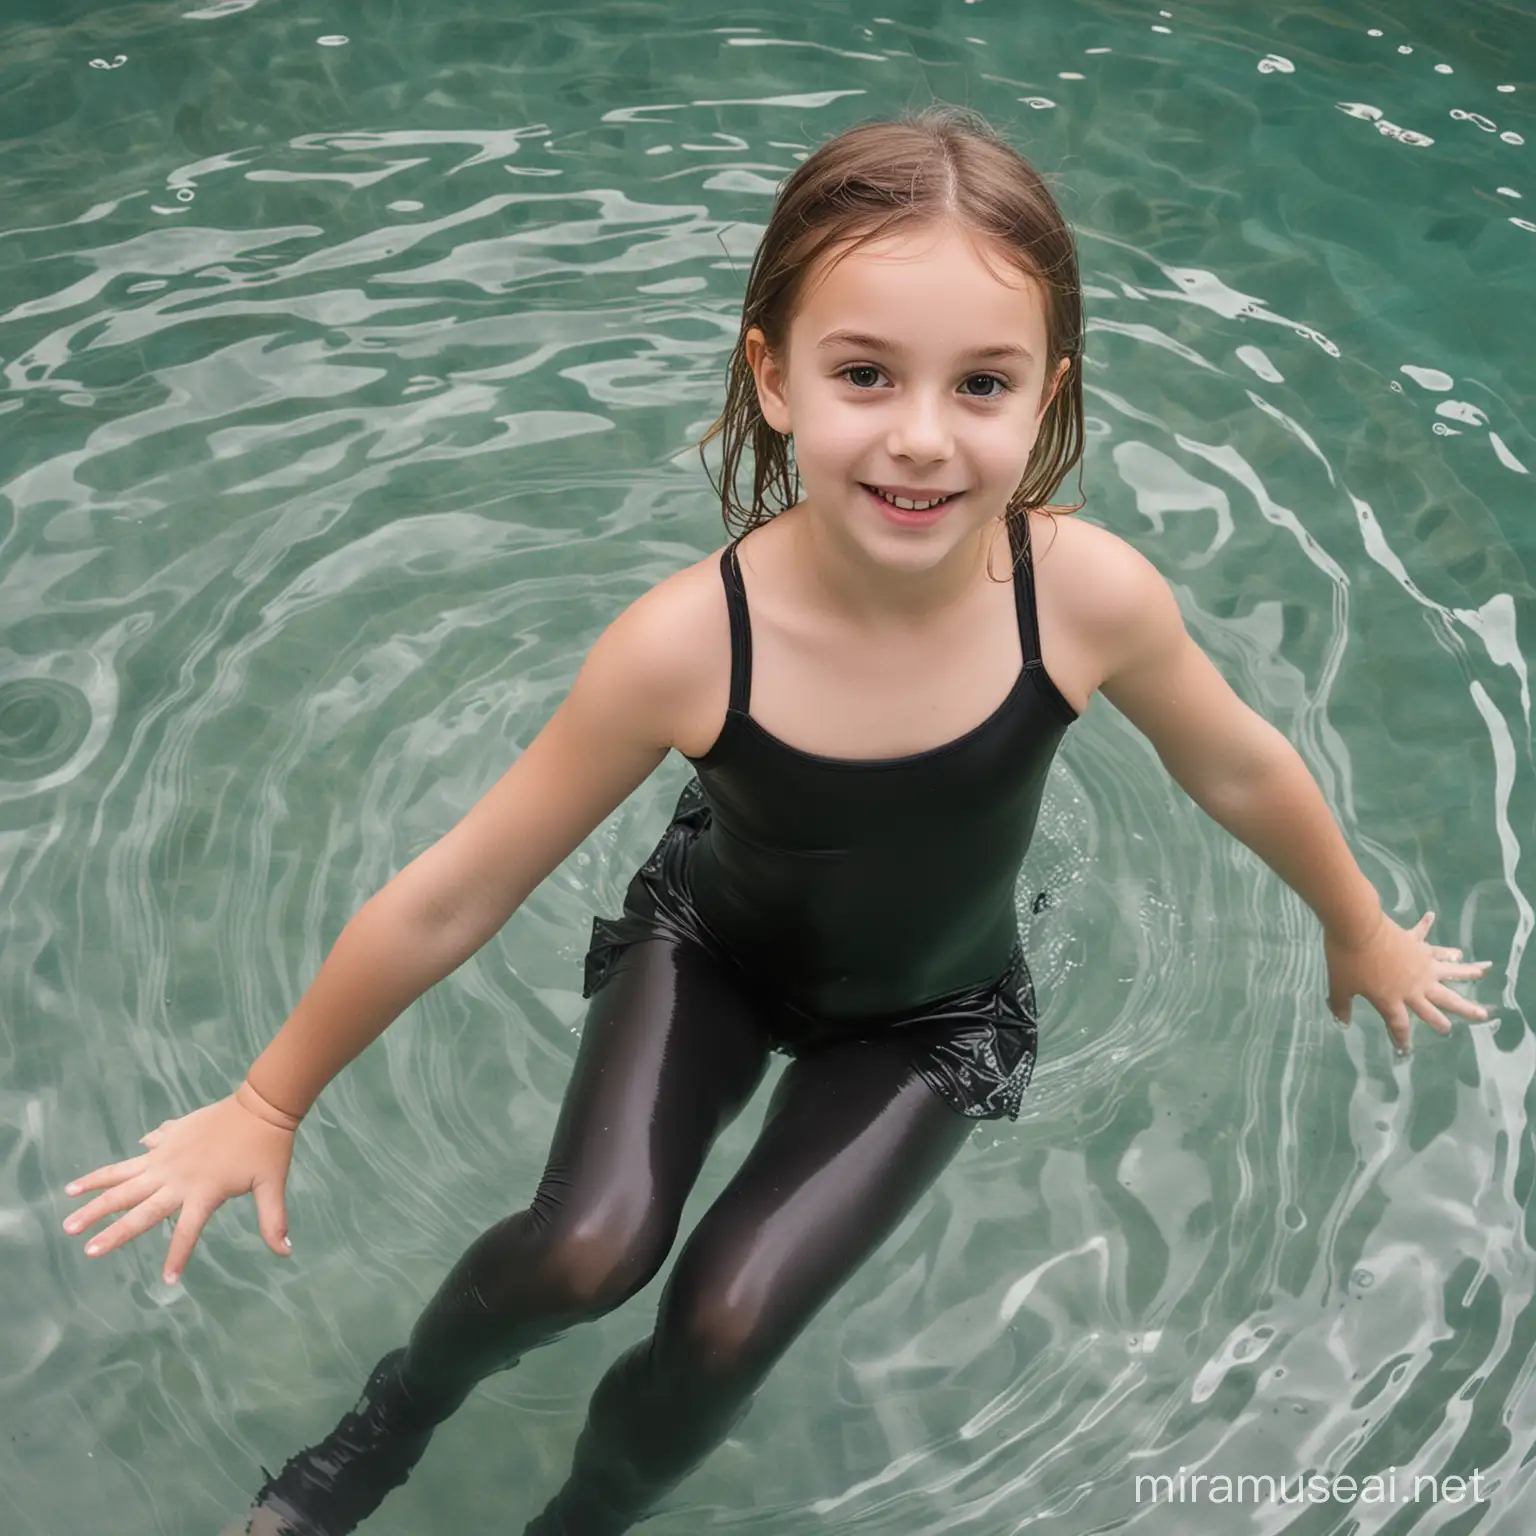 Young Girl Enjoying a Swim in Black Pantyhose